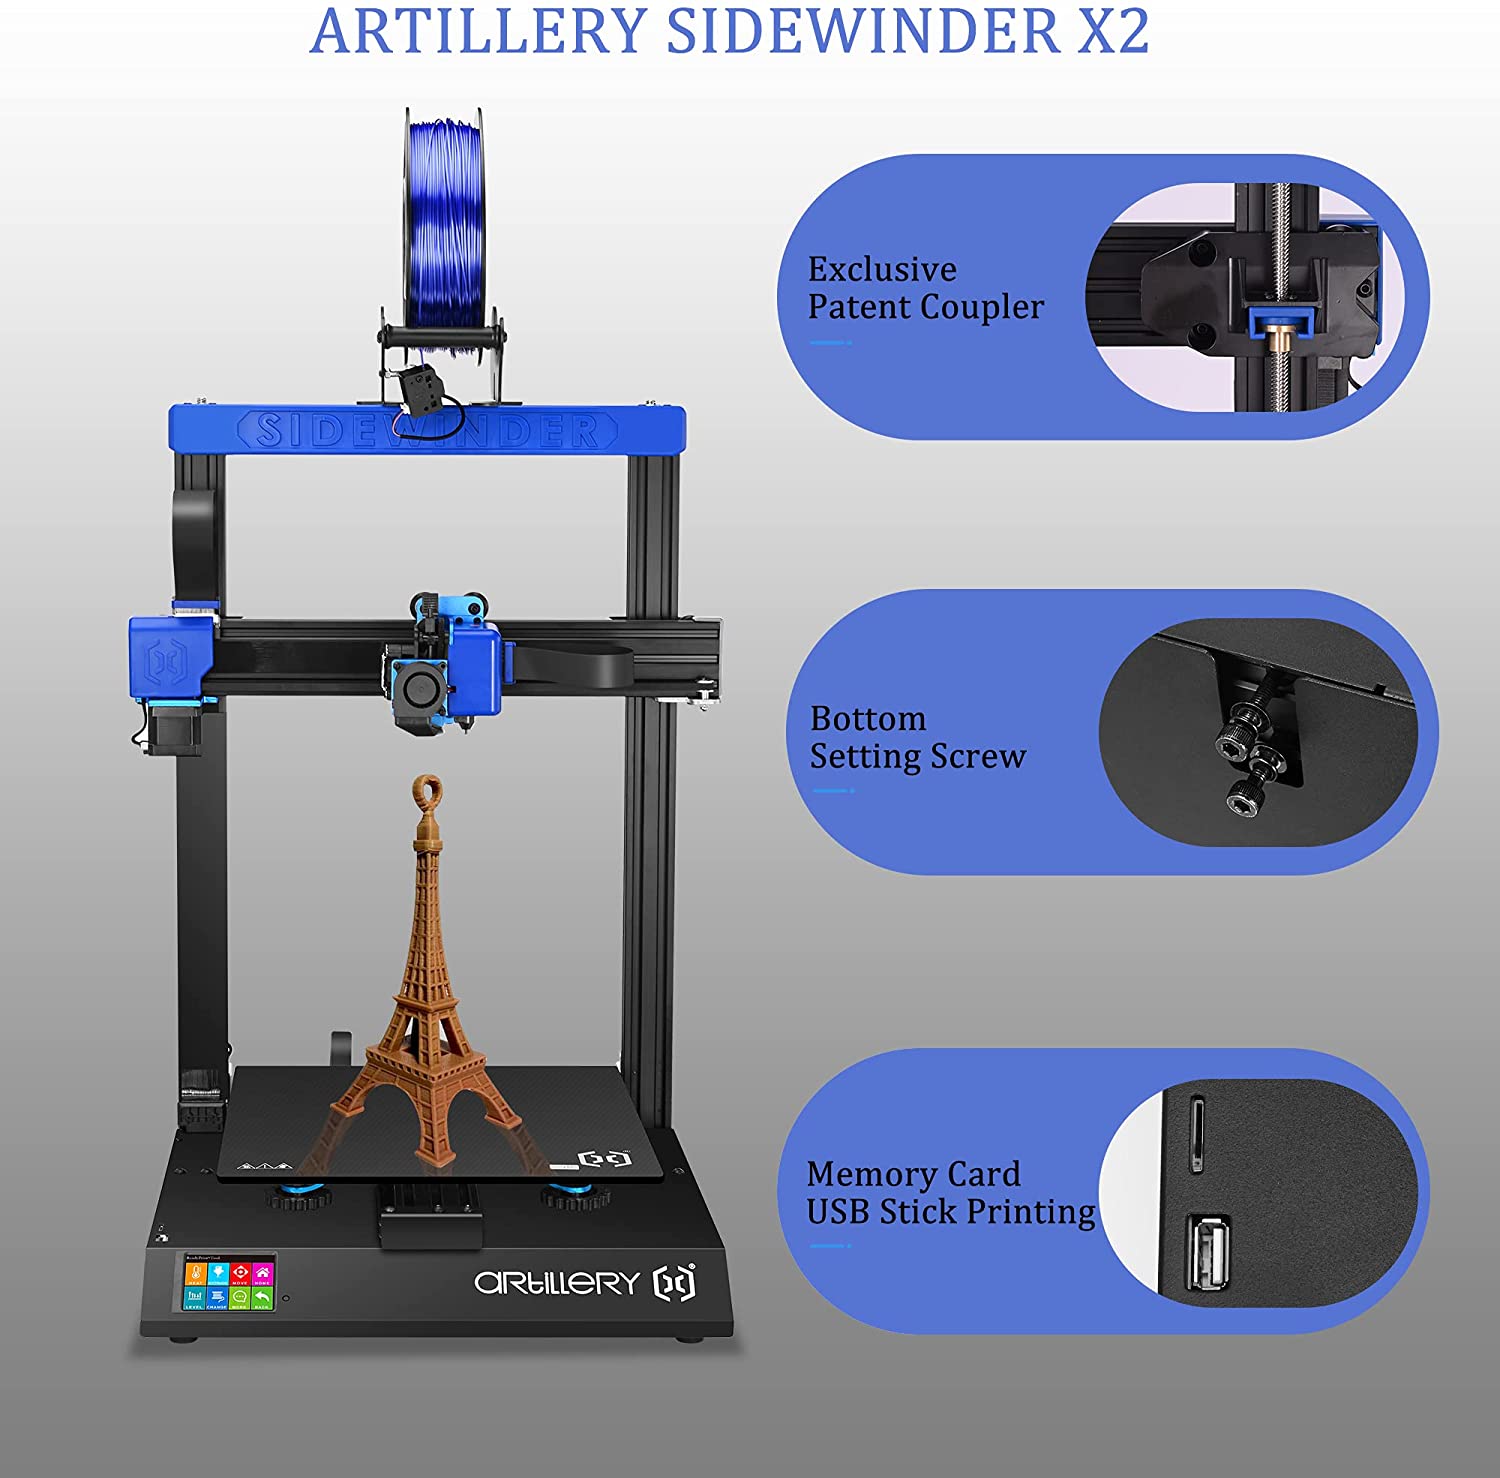 ARTILLERY SIDEWINDER X2 